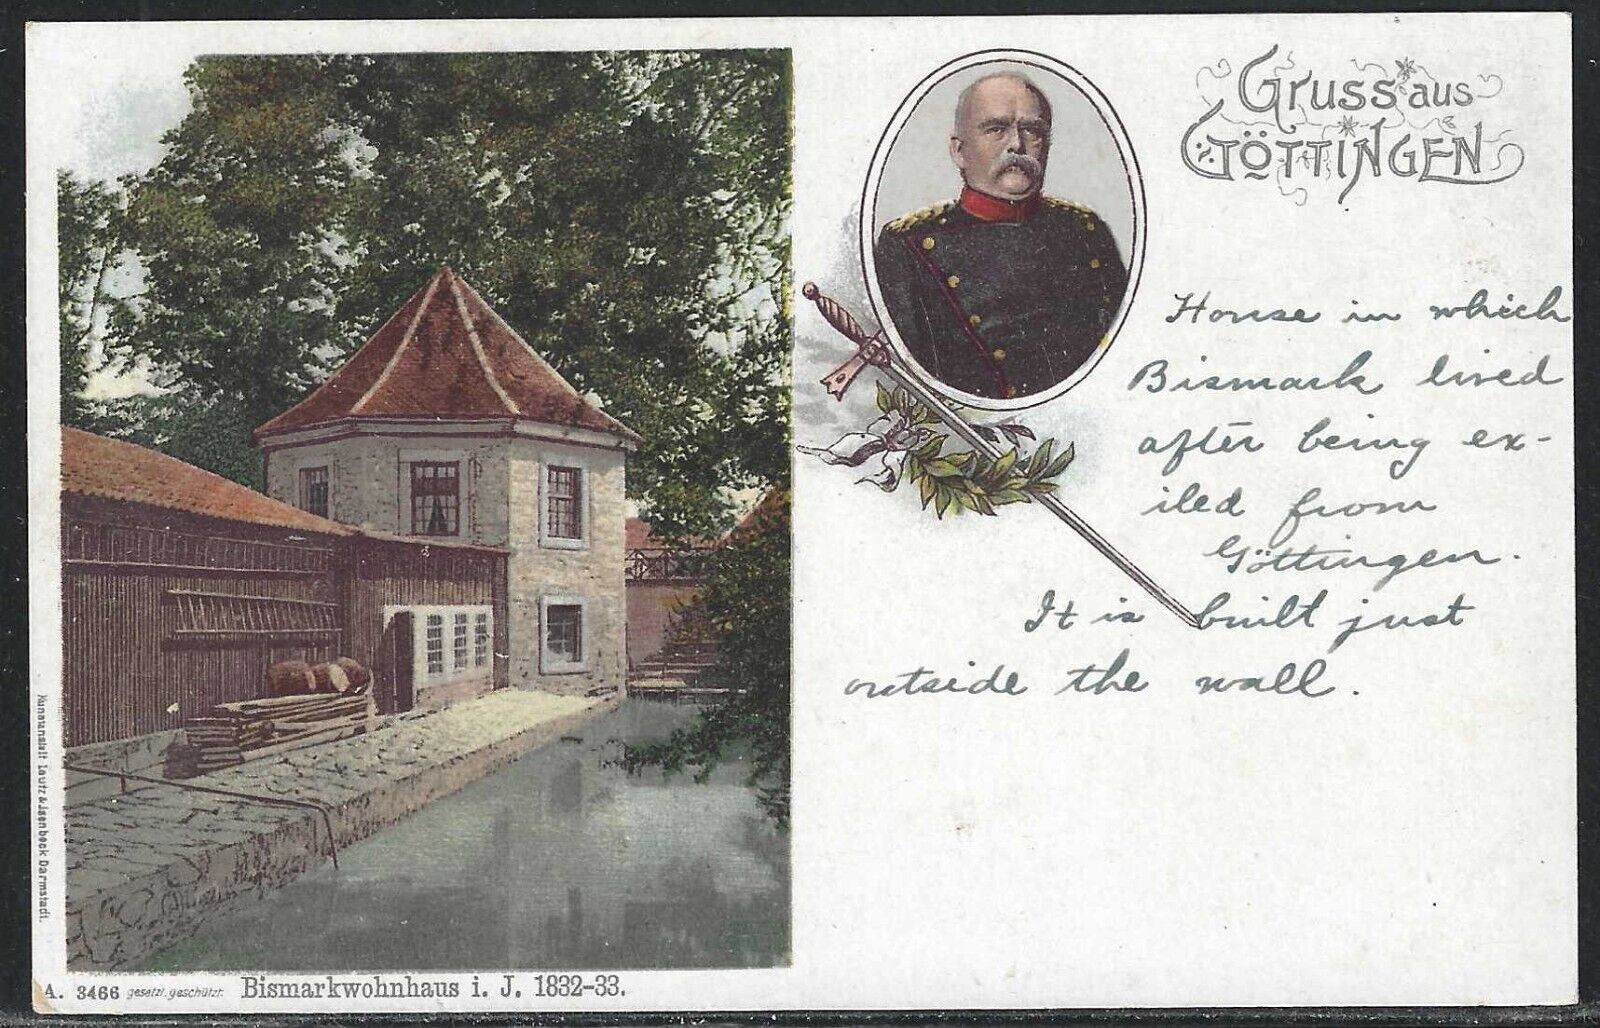 Greetings from Gottingen, Very Early German Postcard showing Otto Von Bismark